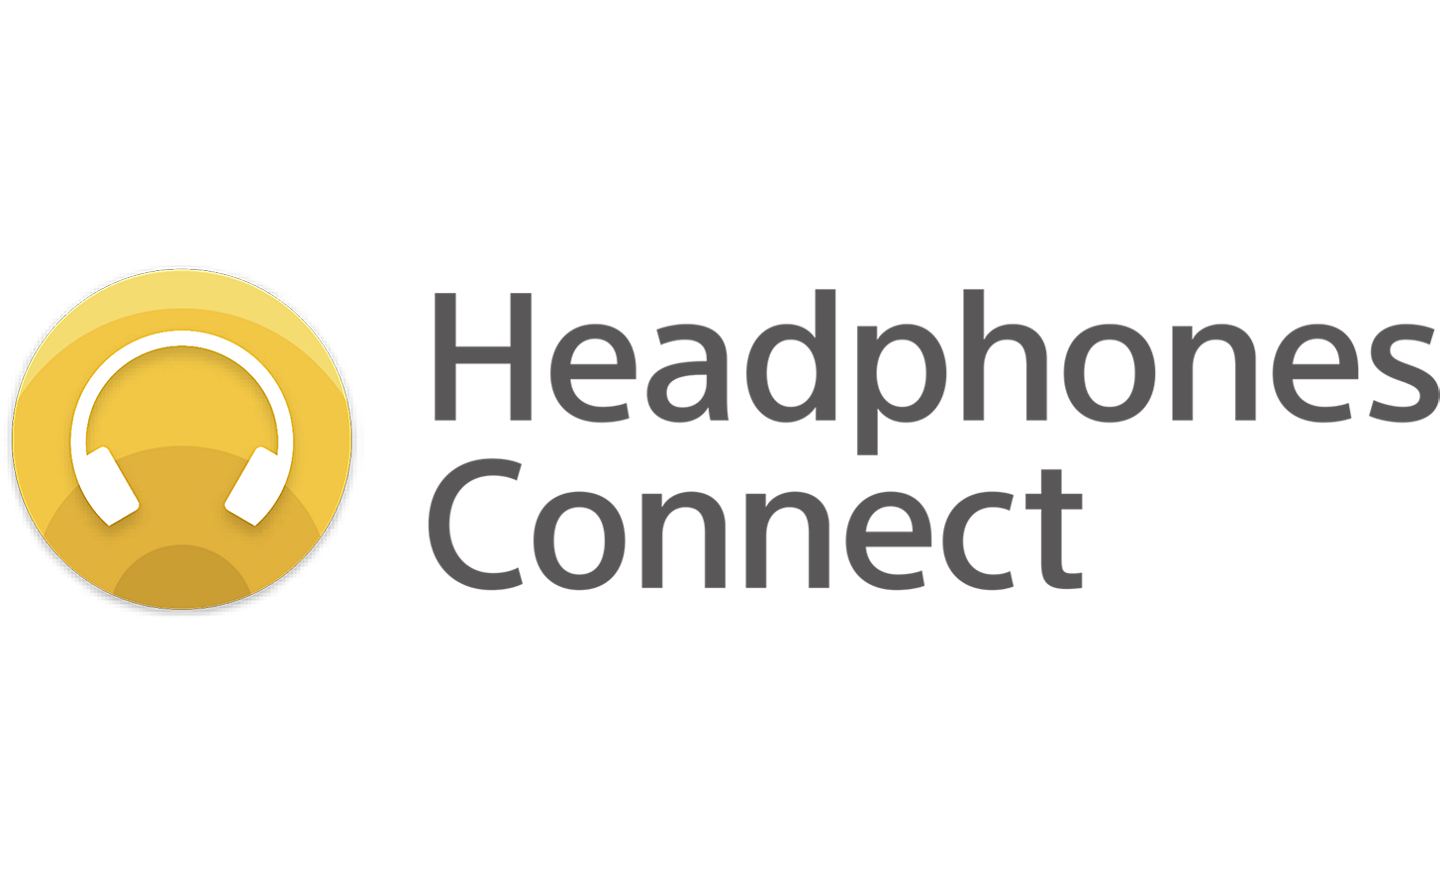 Image of the Sony Headphones Connect app logo